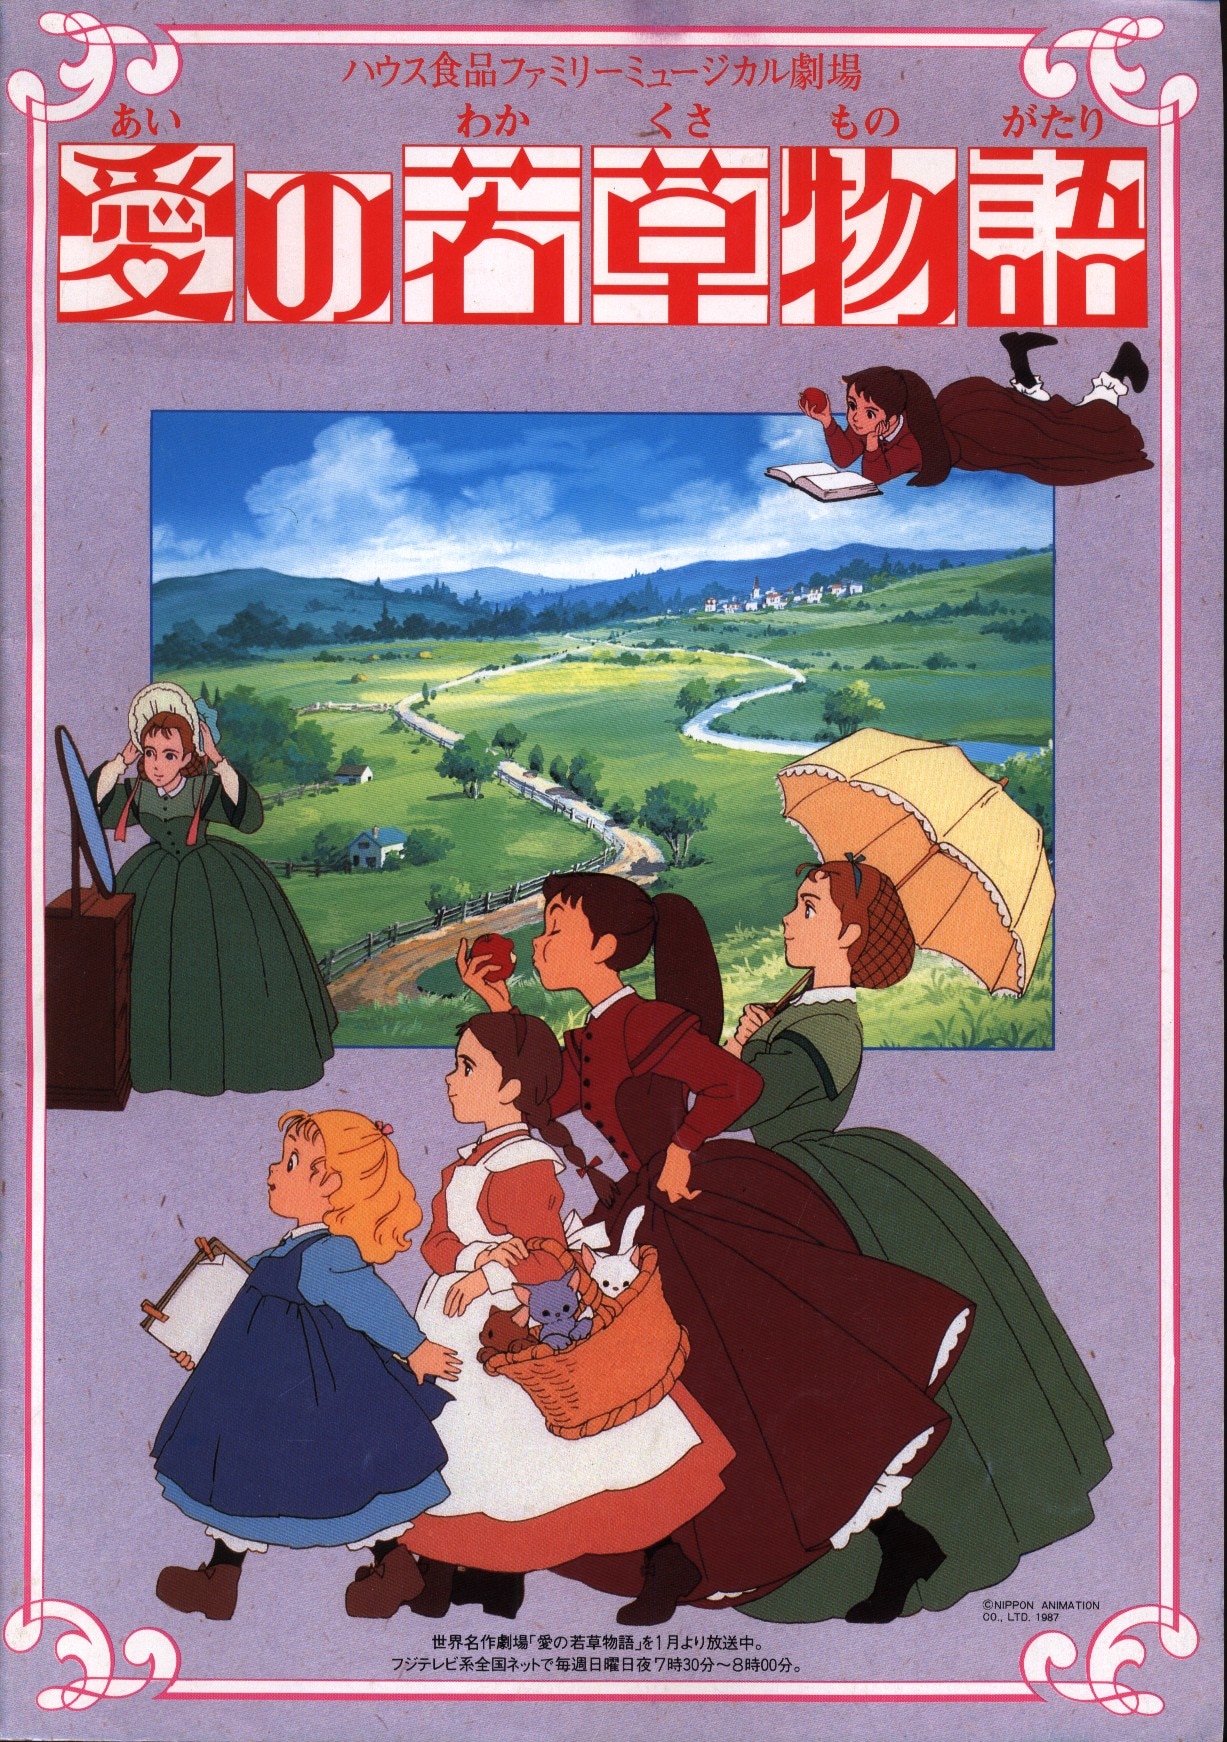 CHOGOKIN Going Merry -ONE PIECE anime 20th anniversary Memorial